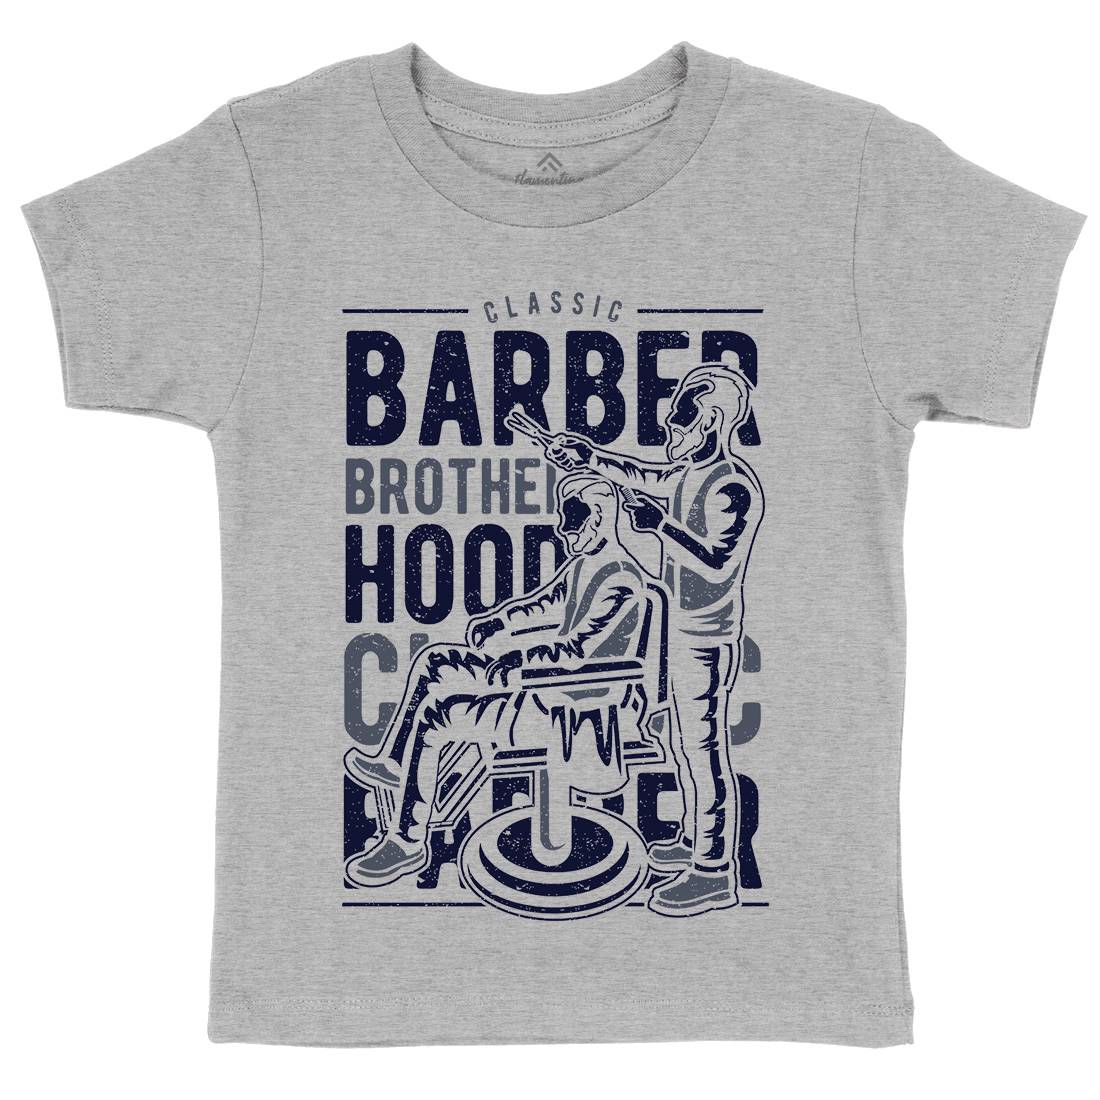 Brotherhood Kids Crew Neck T-Shirt Barber A009